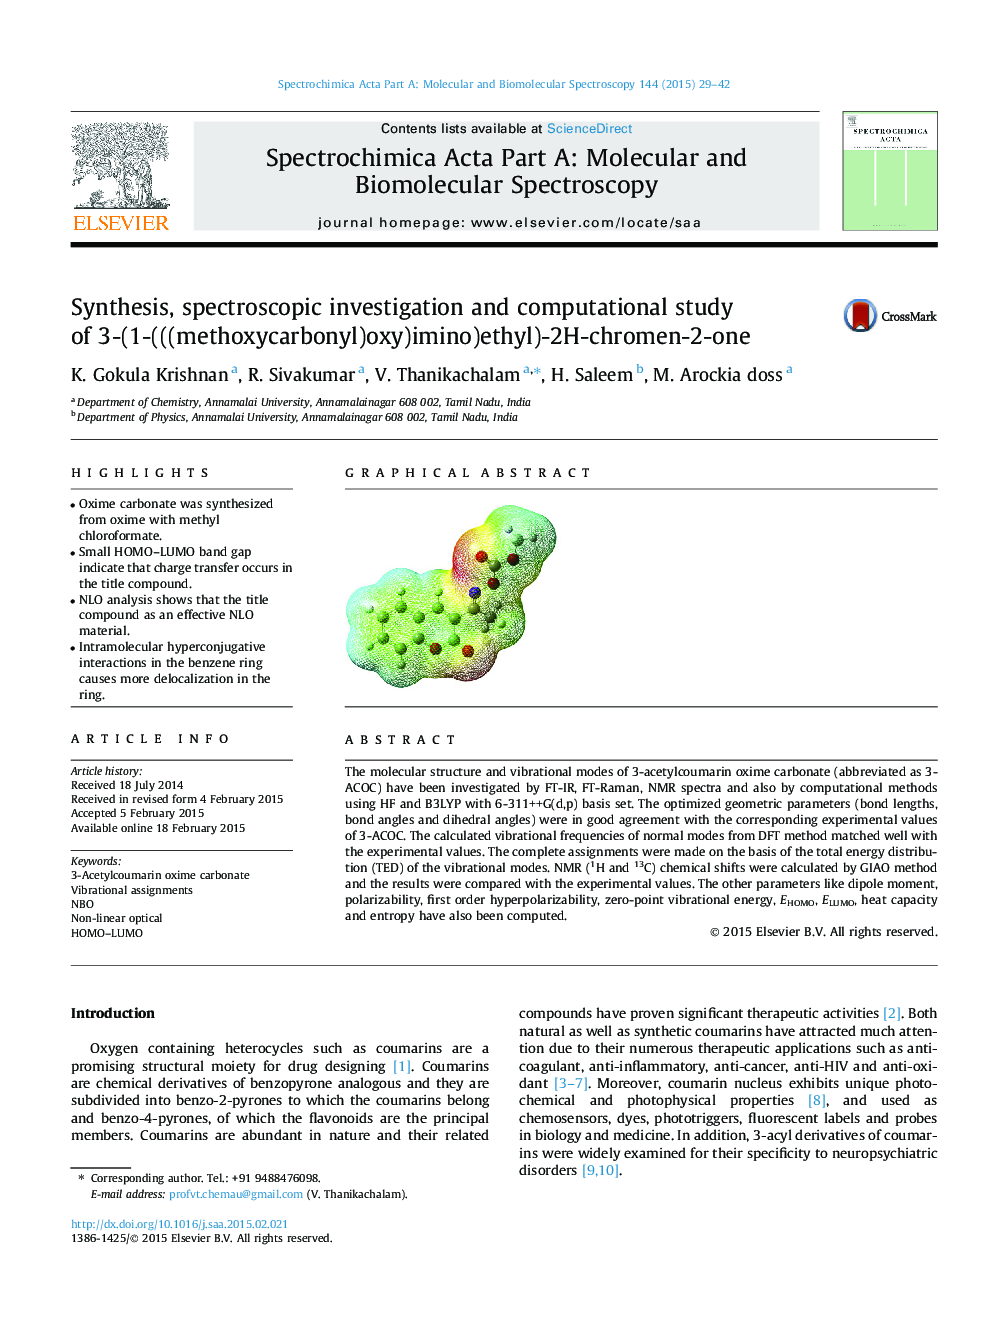 Synthesis, spectroscopic investigation and computational study of 3-(1-(((methoxycarbonyl)oxy)imino)ethyl)-2H-chromen-2-one